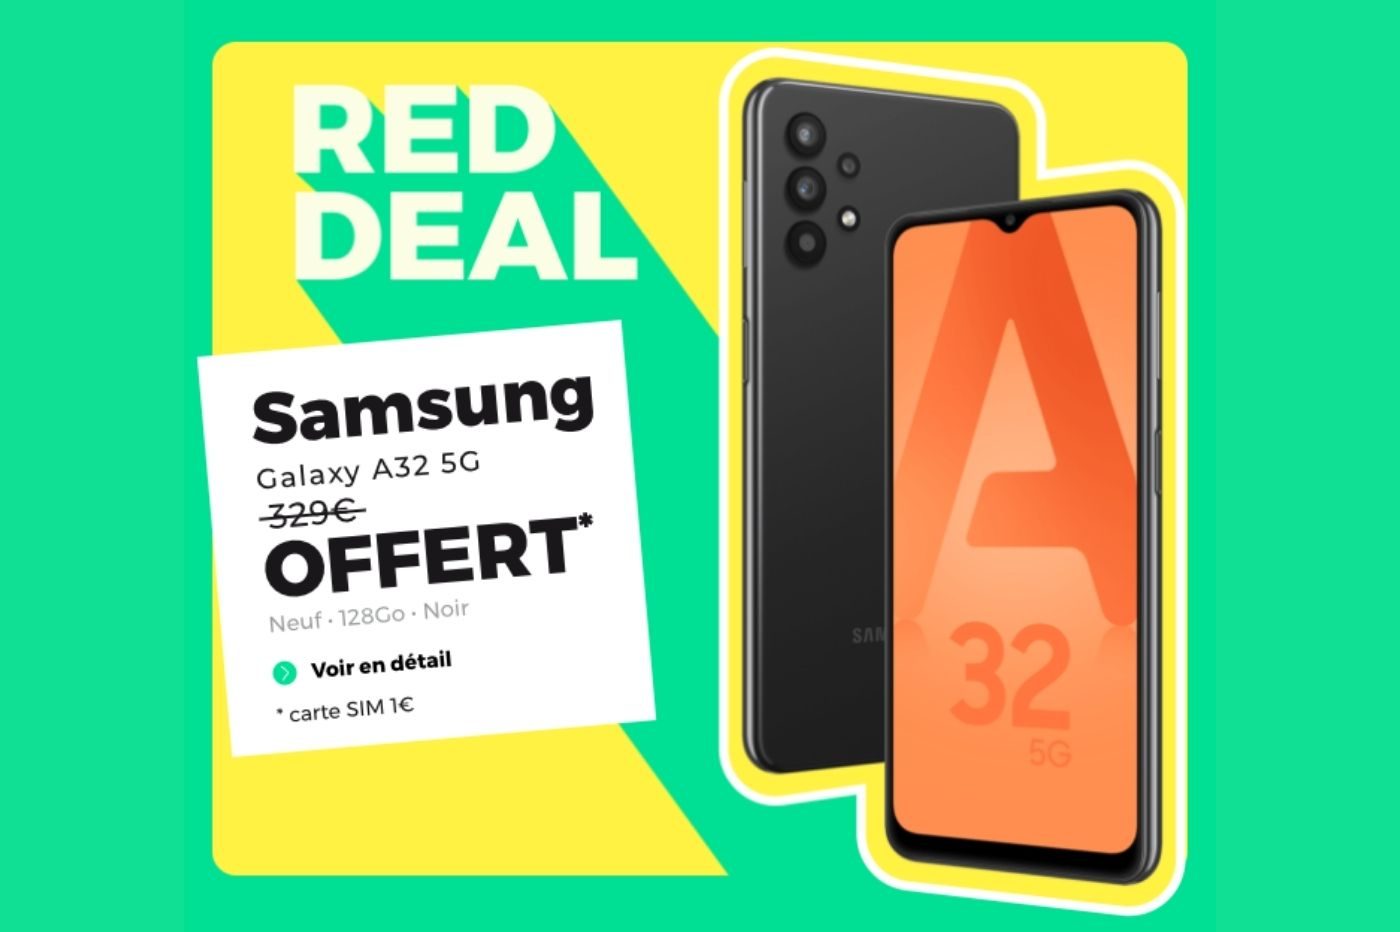 RED Deal Samsung Galaxy A32 5G